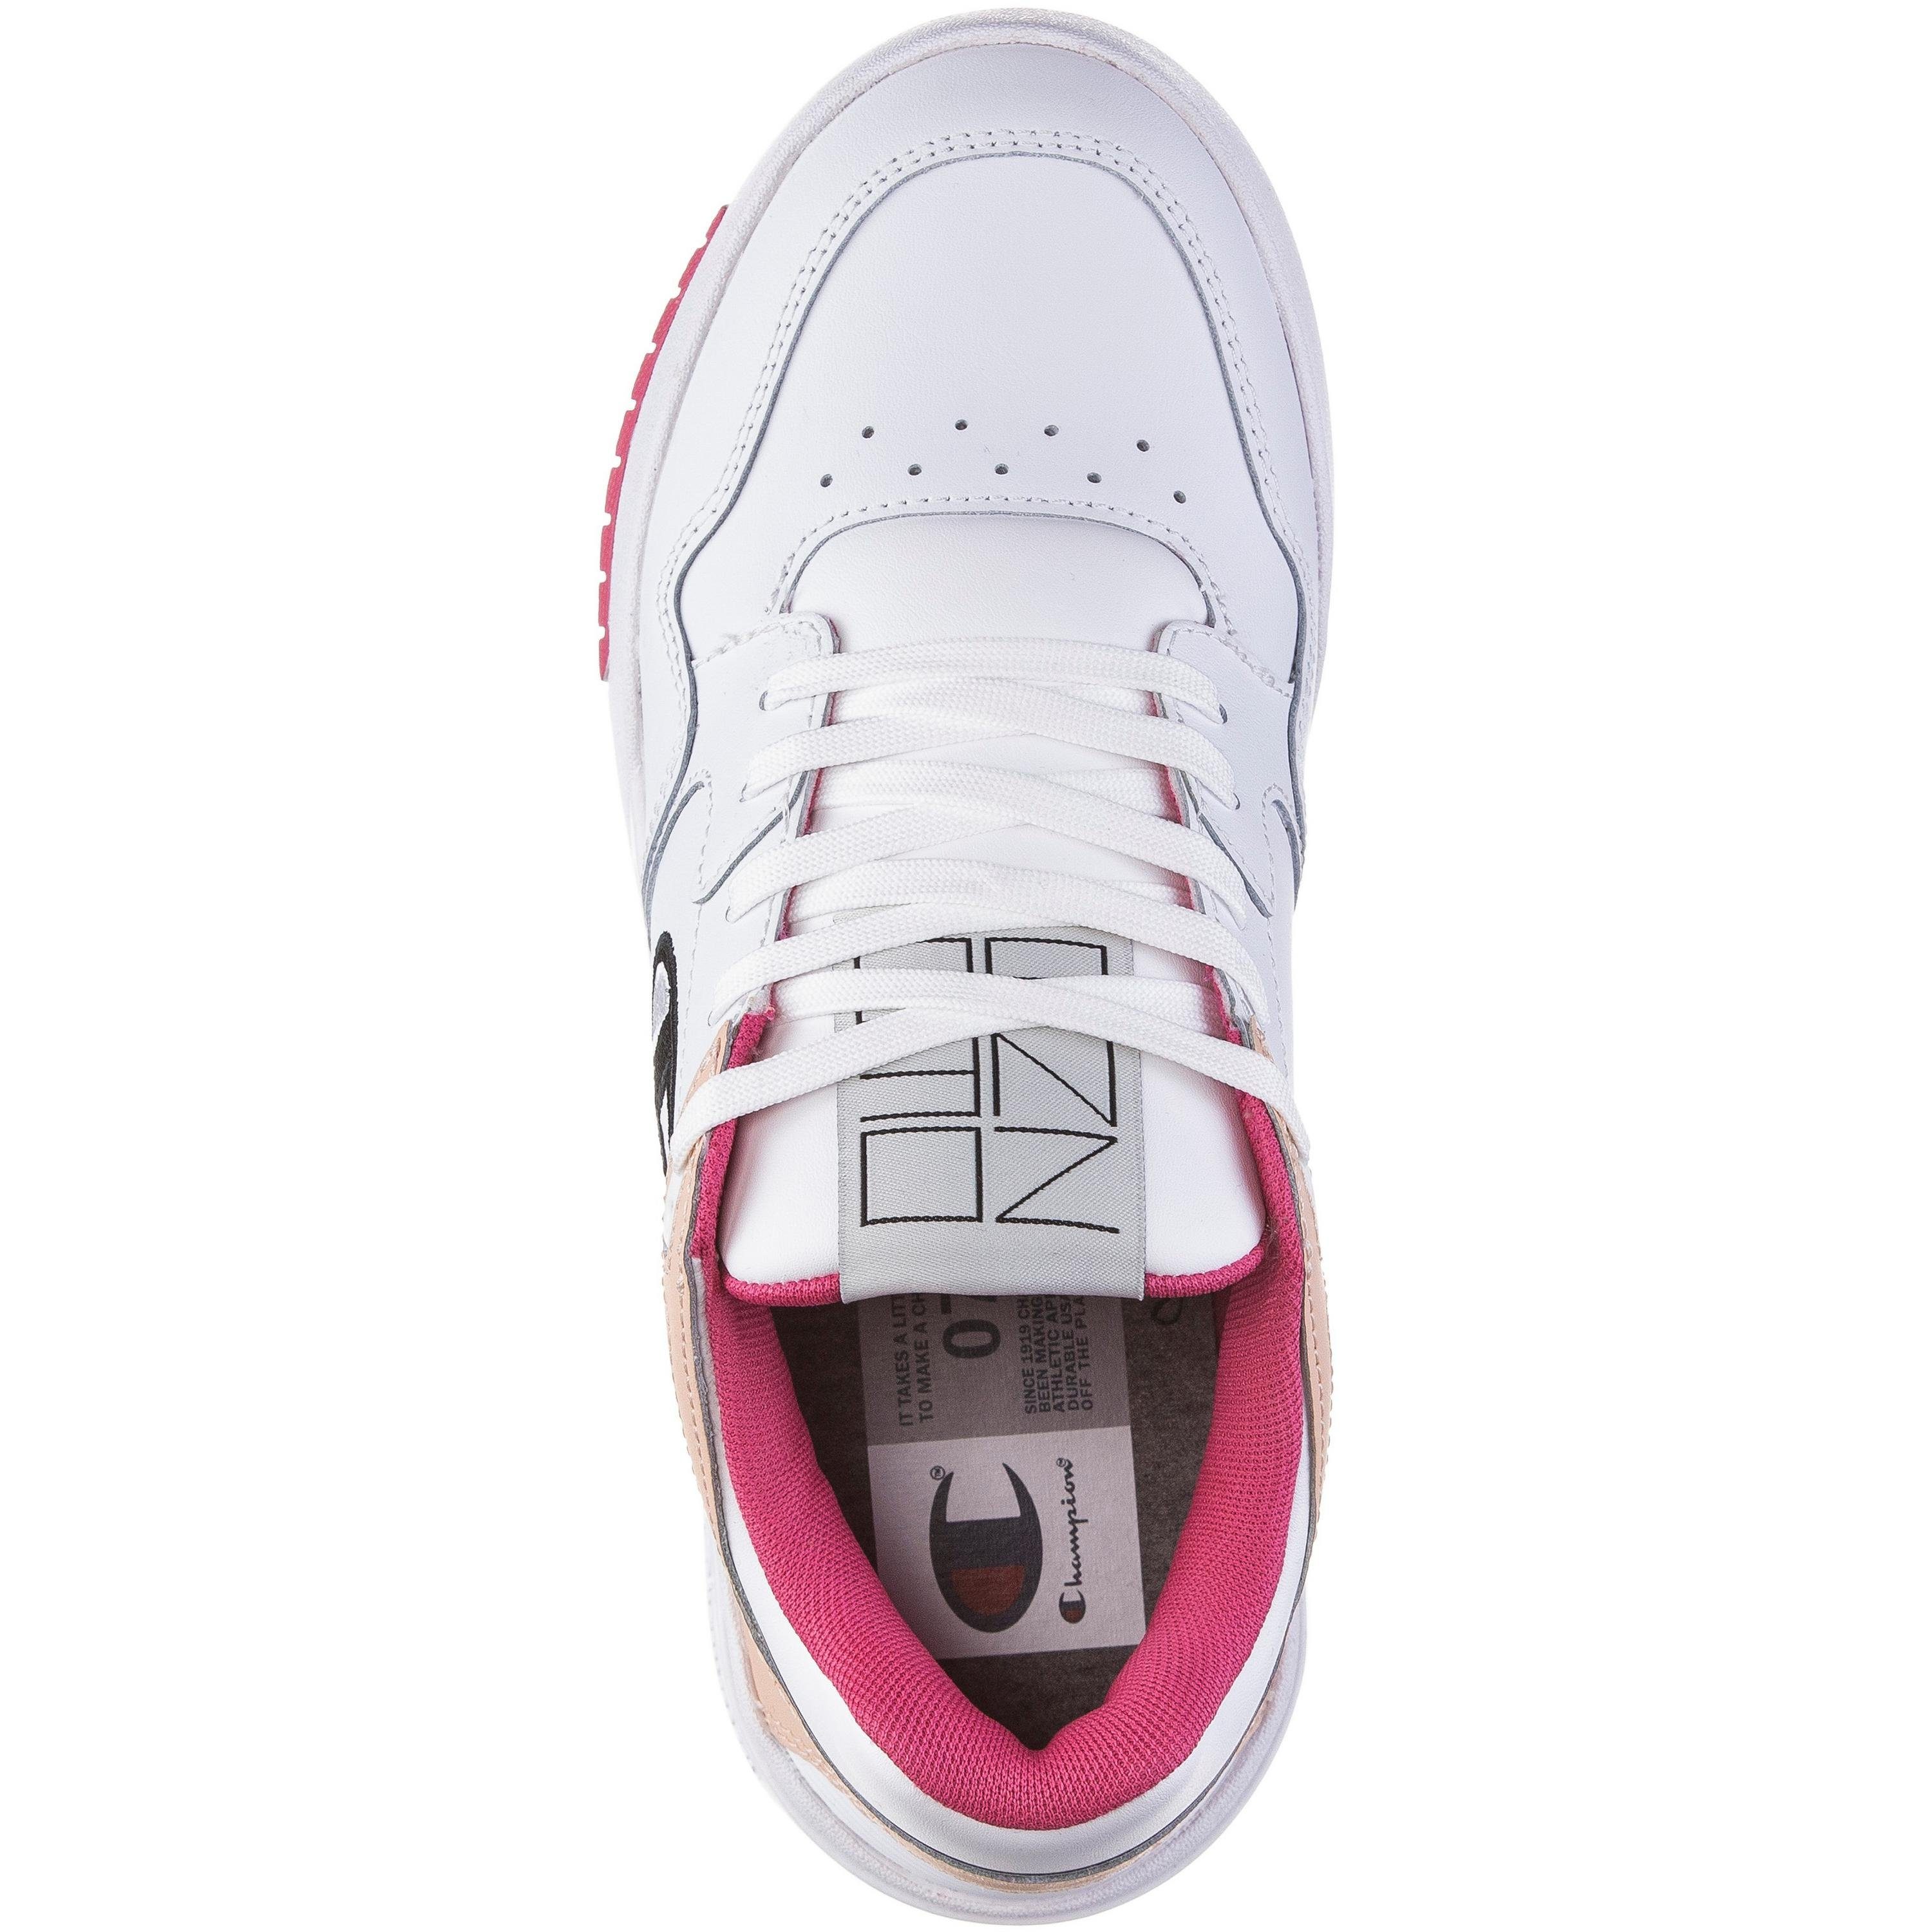 Sneaker Z80 white-black Champion beauty-pink Rochester